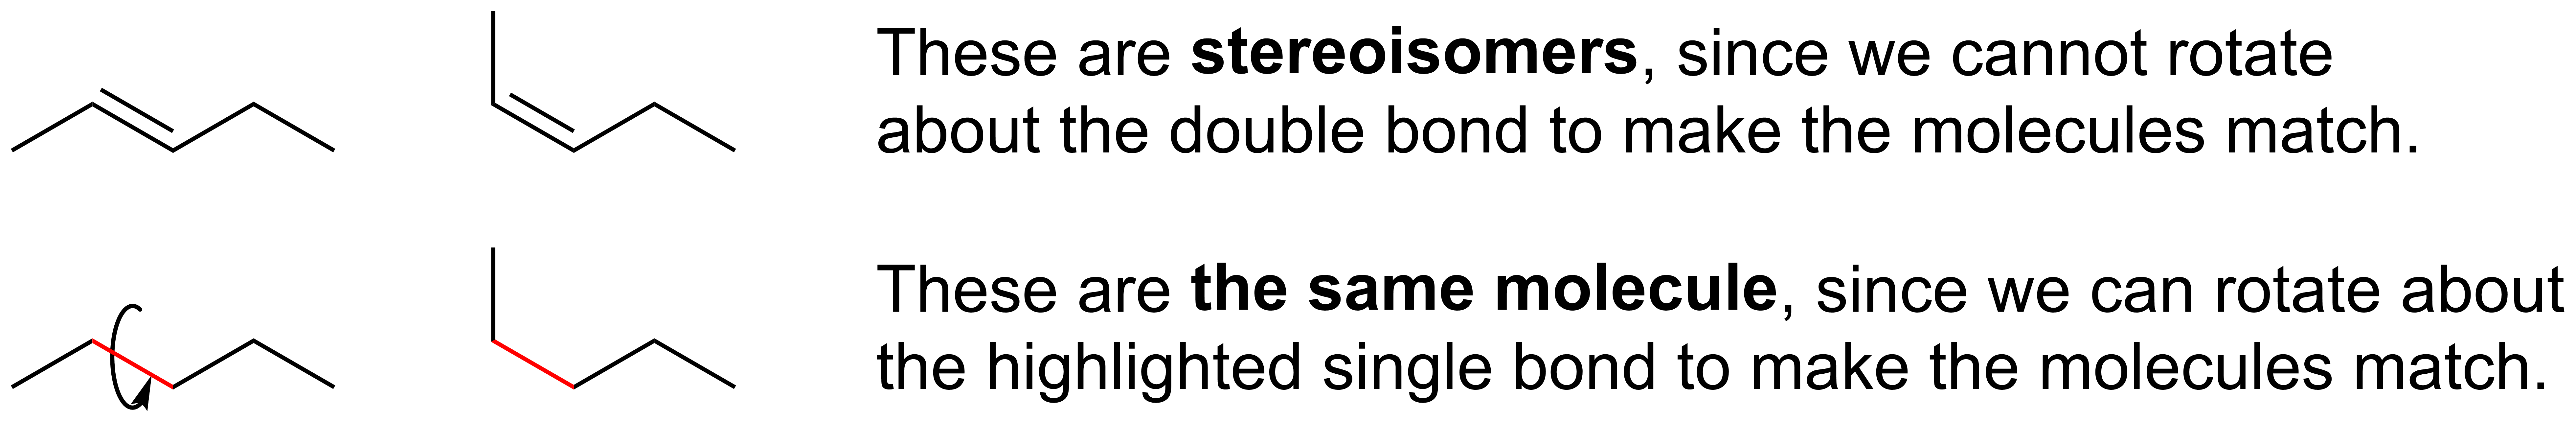 stereoisomers vs same molecule